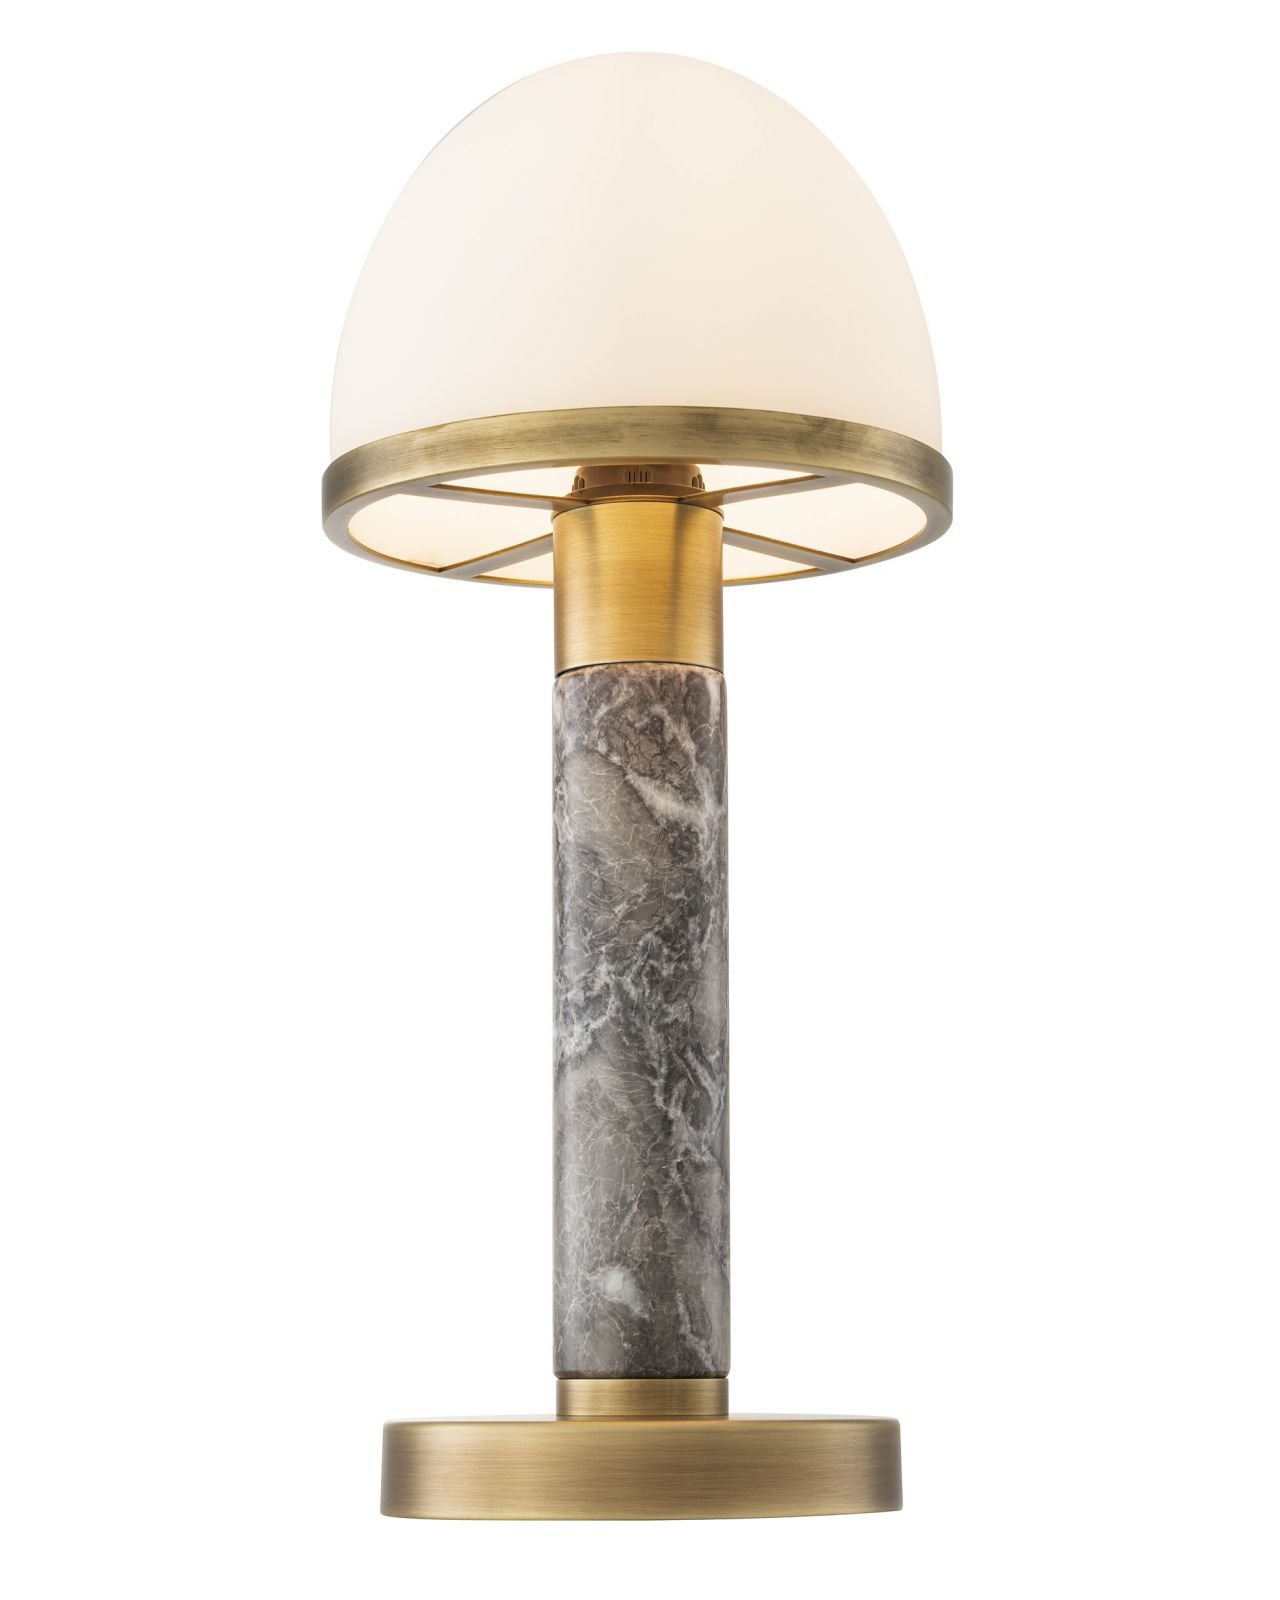 Ziegèl bordlampe antique brass